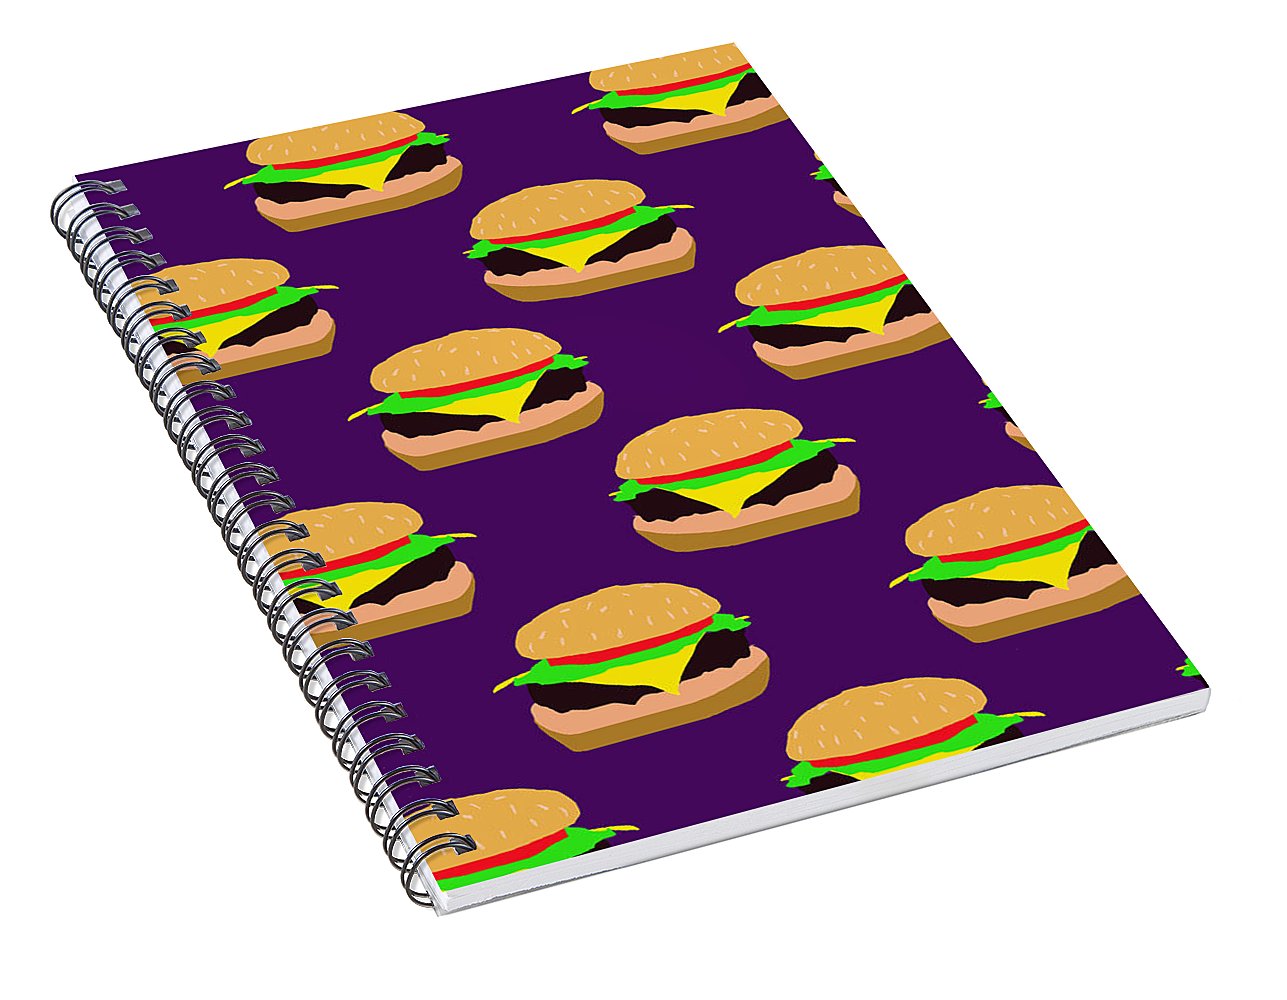 Burger Pattern - Spiral Notebook